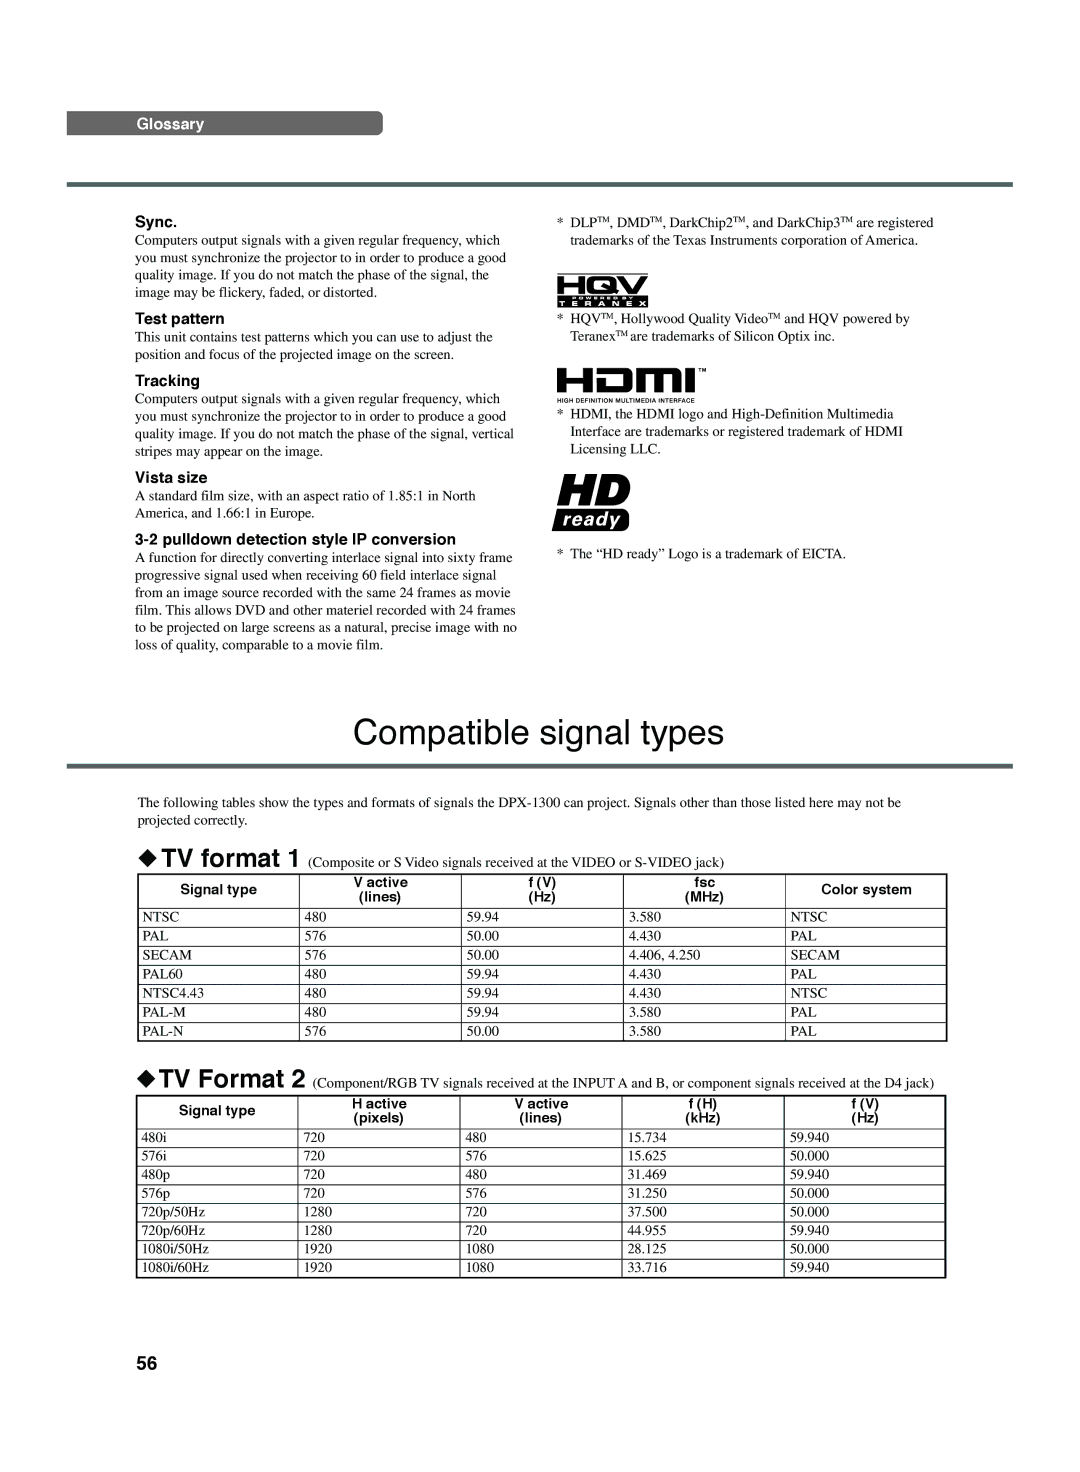 Yamaha DPX-1300 G manual Compatible signal types 